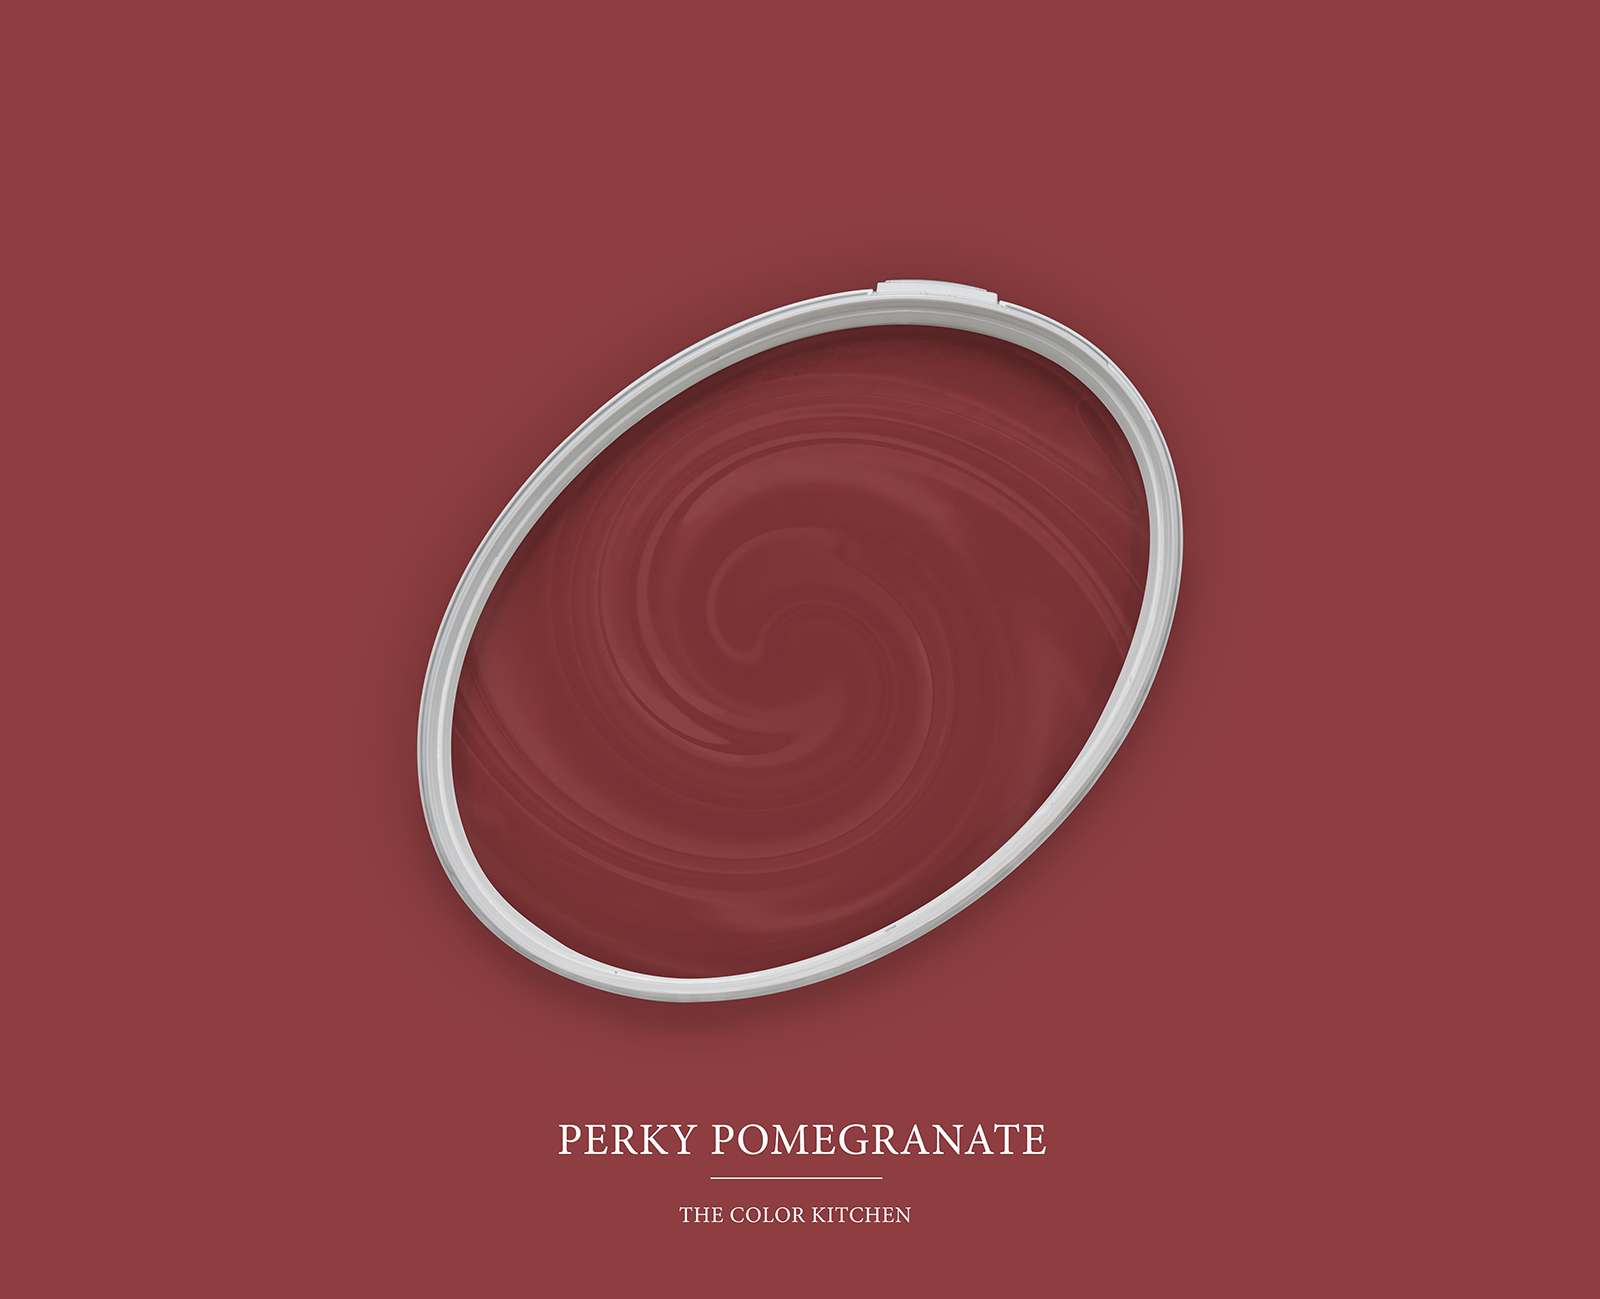         Wandfarbe TCK7006 »Perky Pomegranate« in leidenschaftlichem Dunkelrot – 2,5 Liter
    